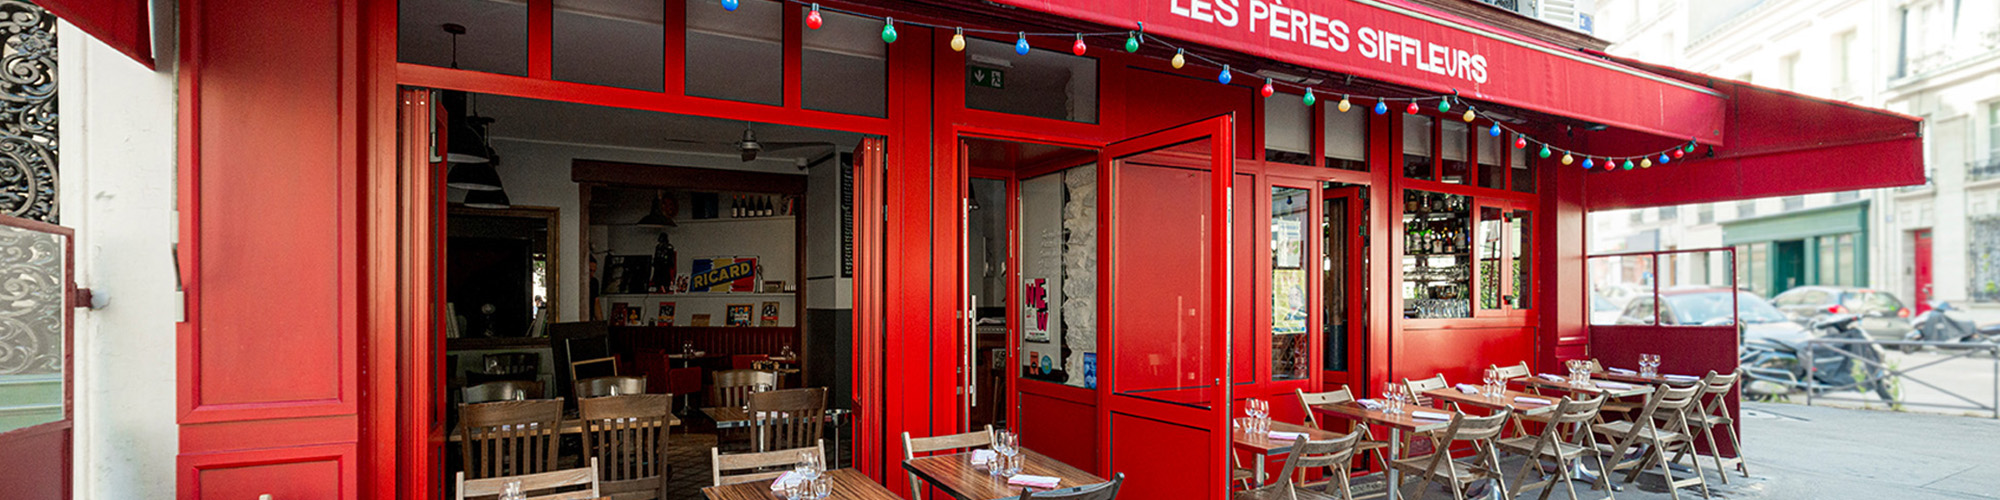 lesperessiffleurs-restaurant-paris-bistronomie-slider-home-02